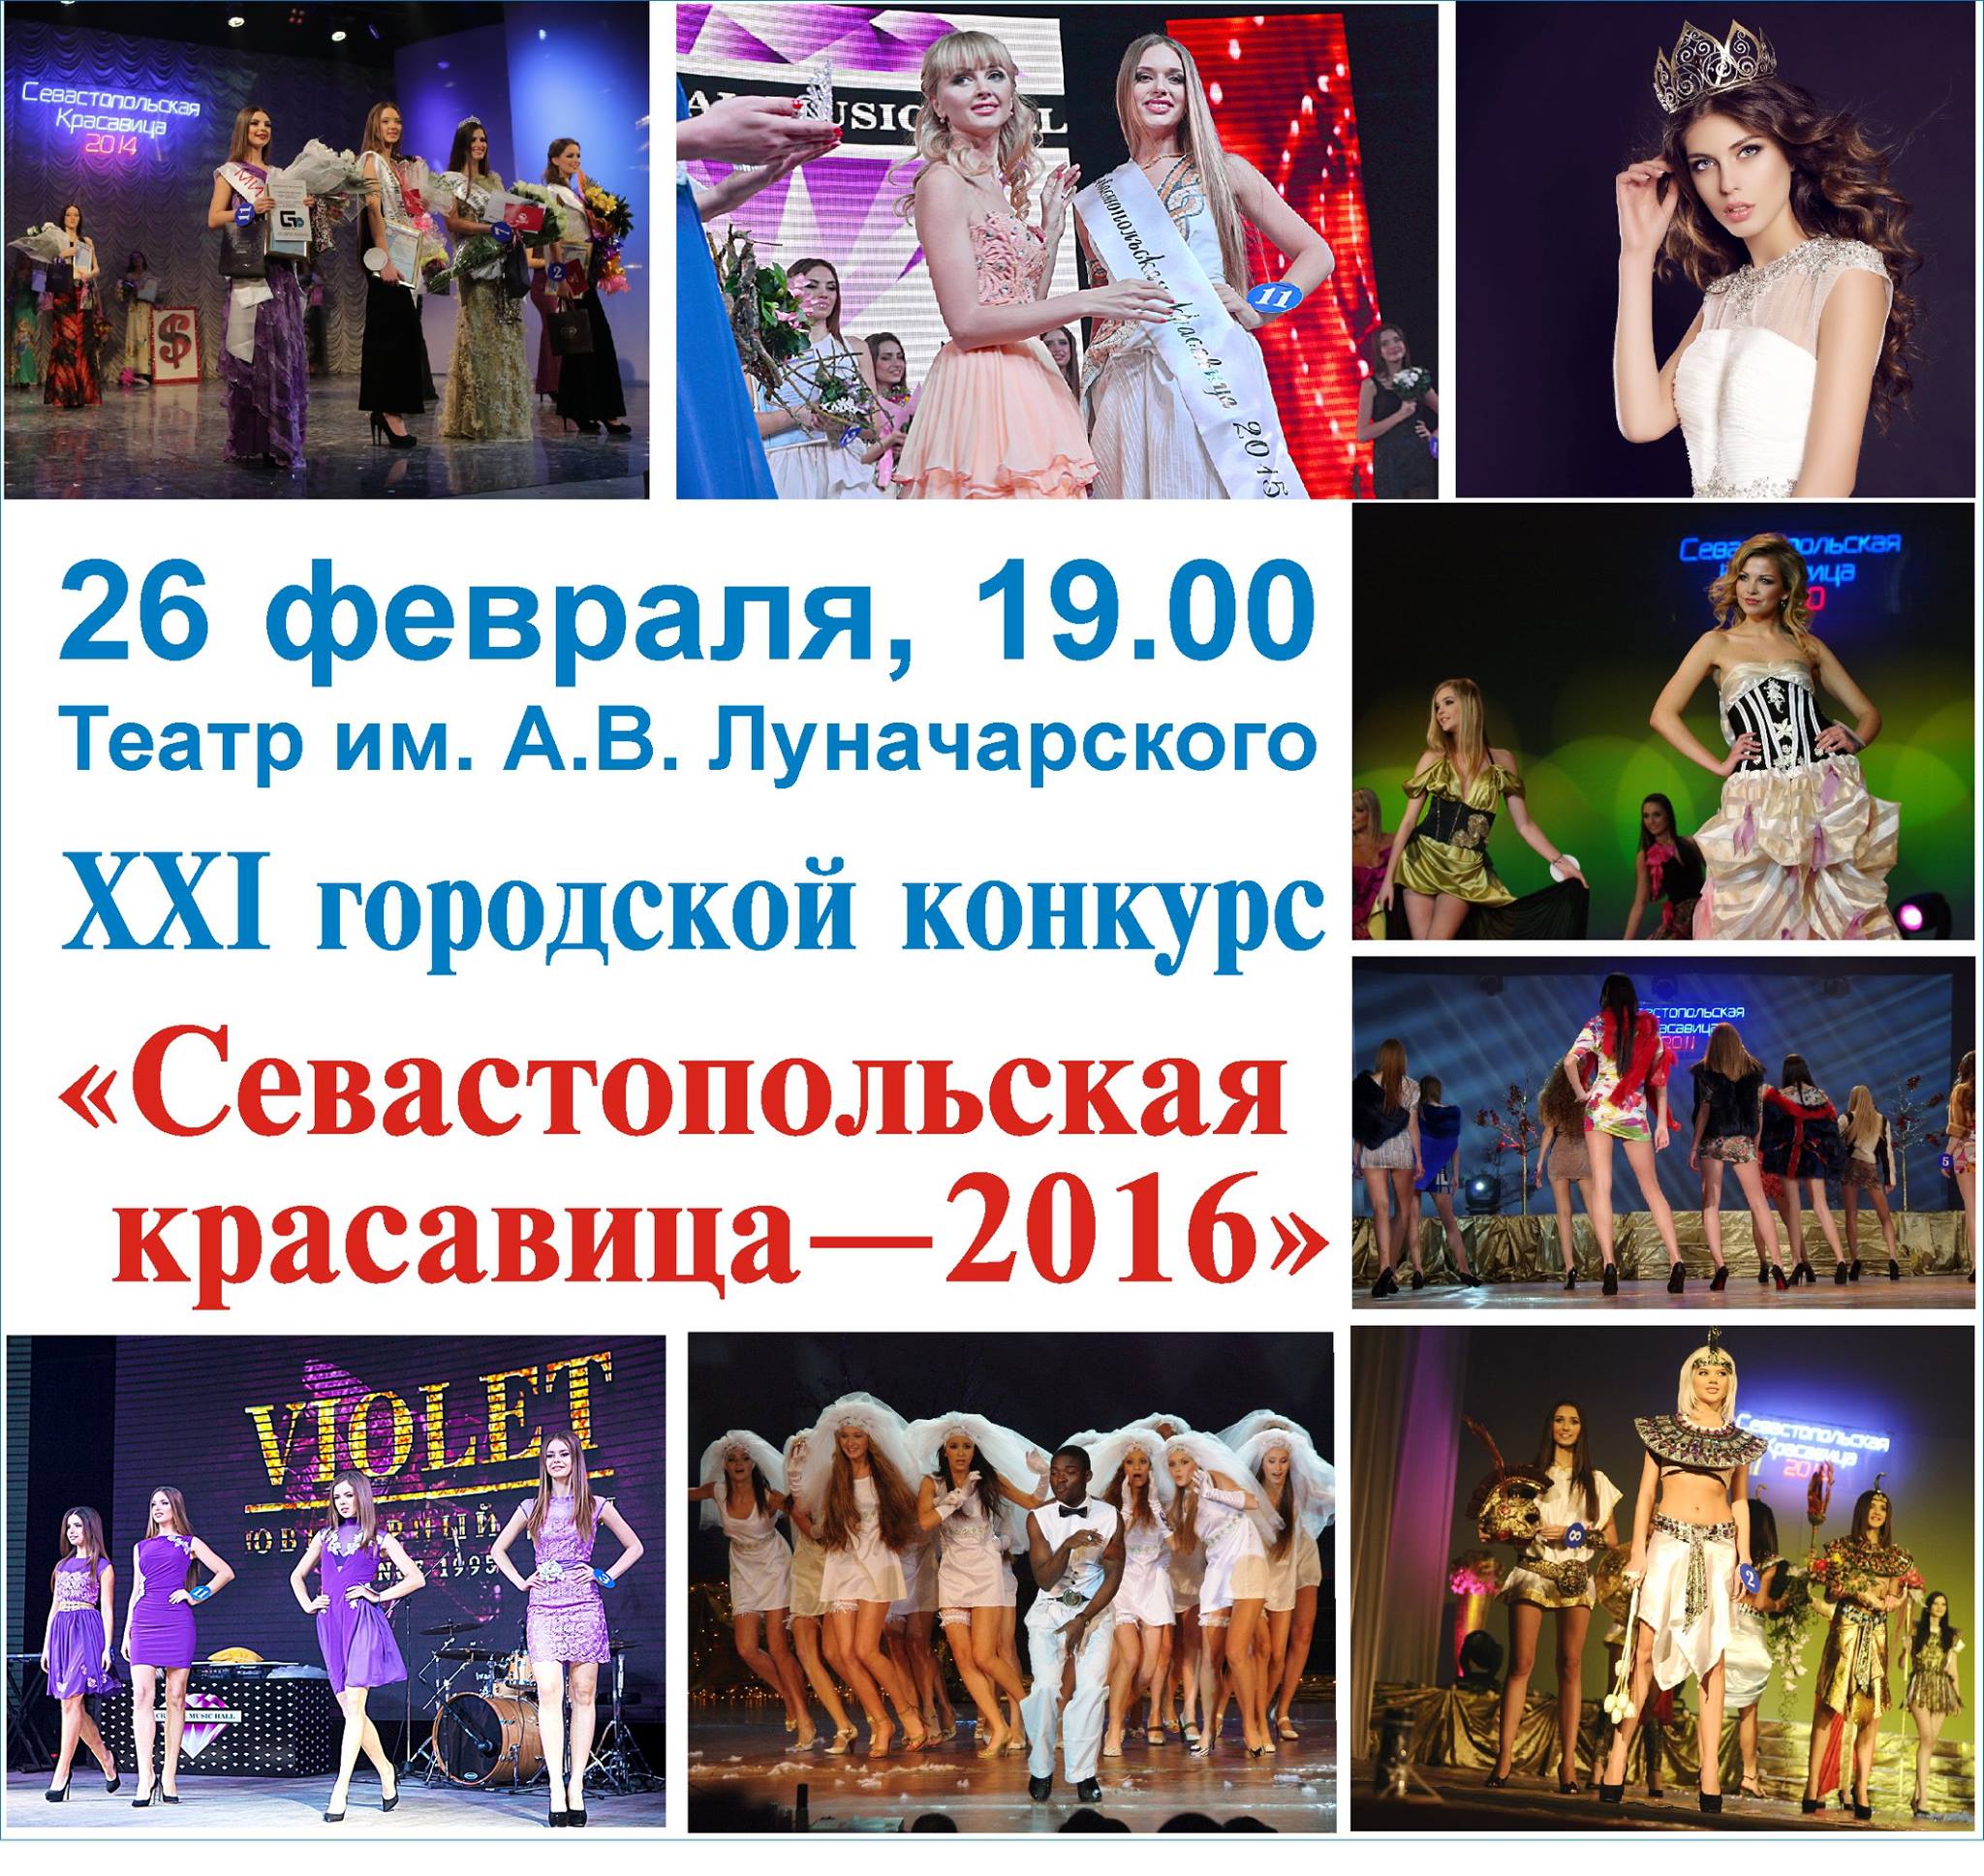 В Севастополе выберут красавицу-2016